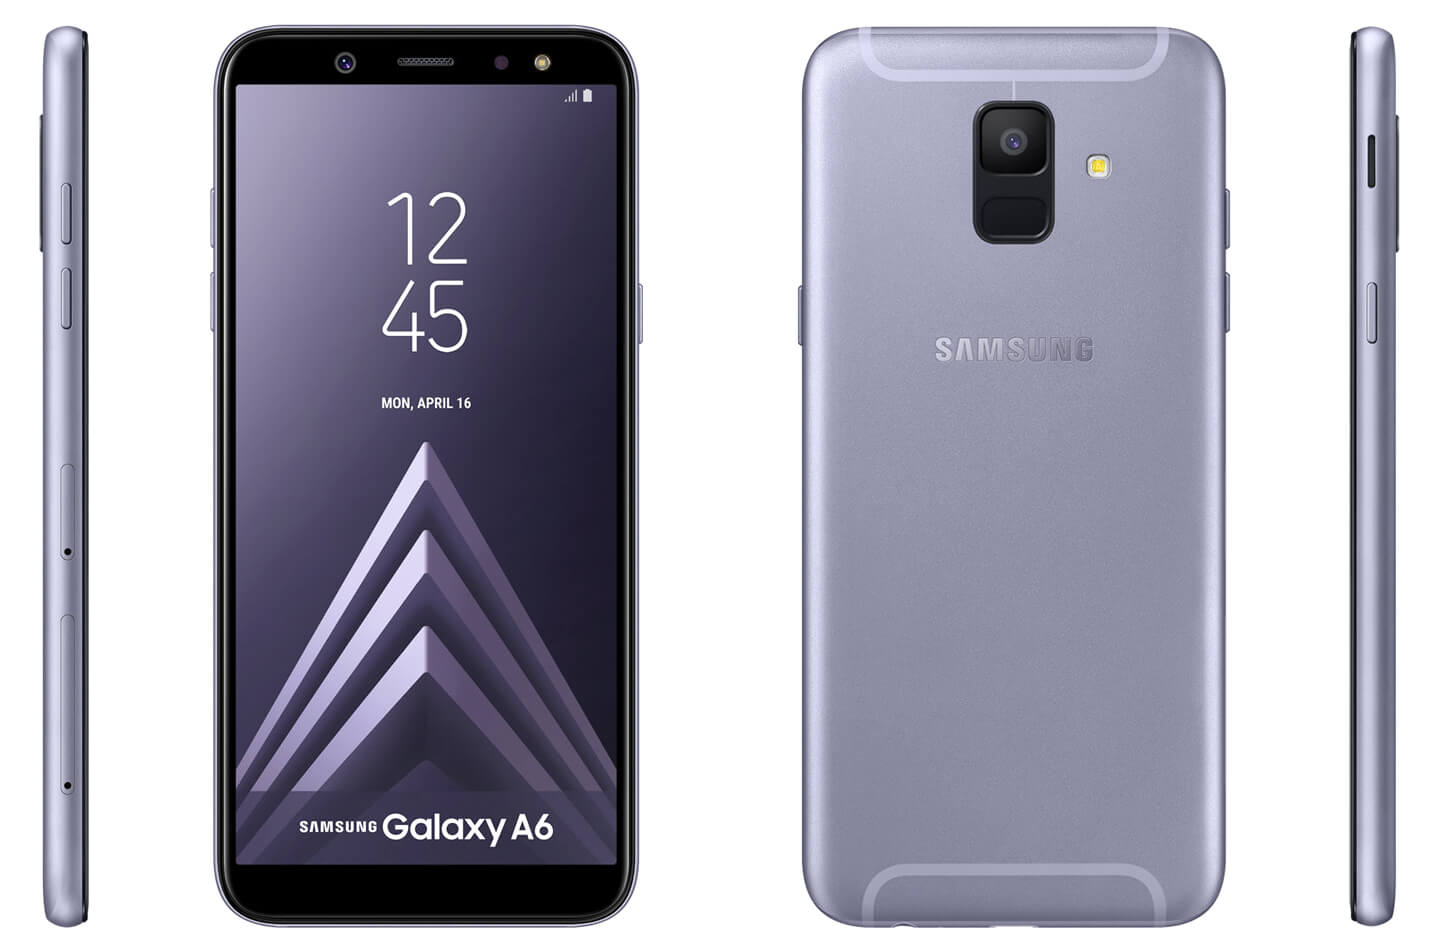 Wreed gek geworden stijl Samsung Galaxy A6 kopen (2018 model)